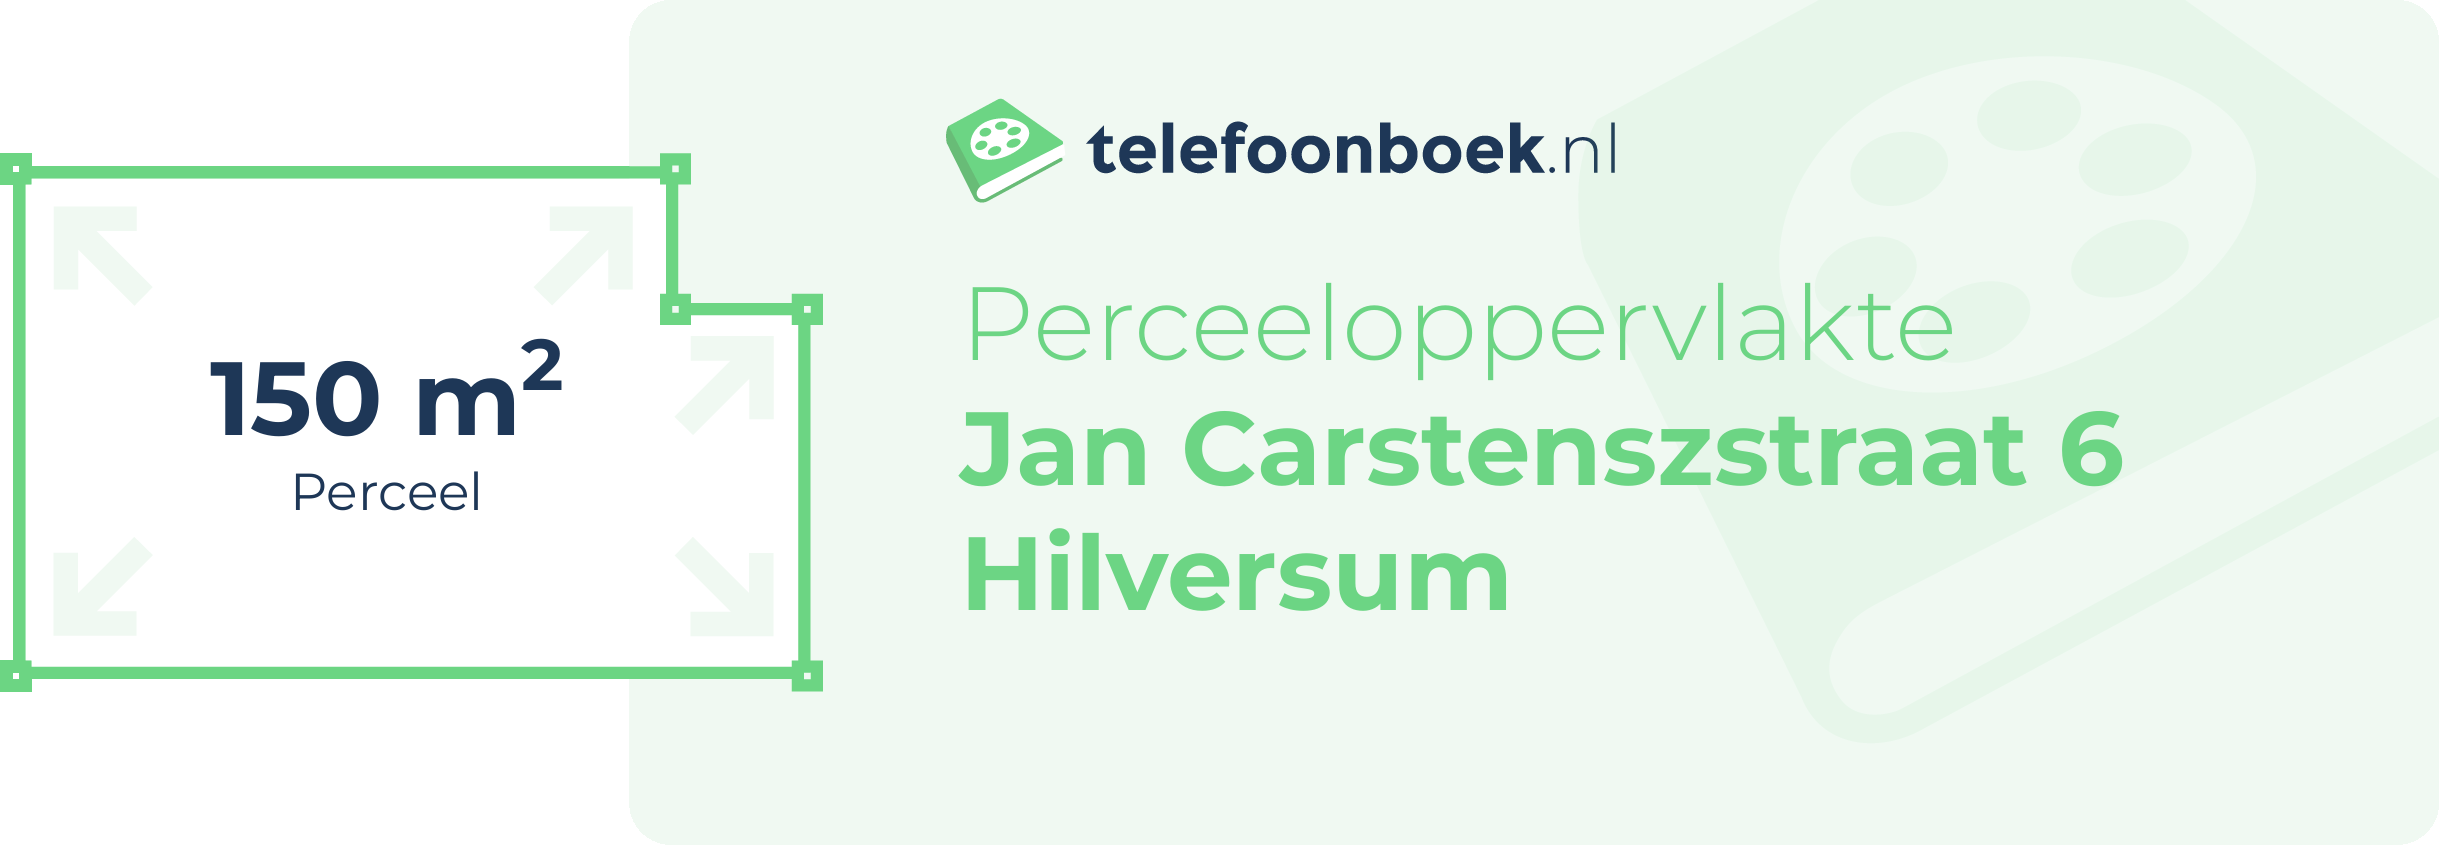 Perceeloppervlakte Jan Carstenszstraat 6 Hilversum